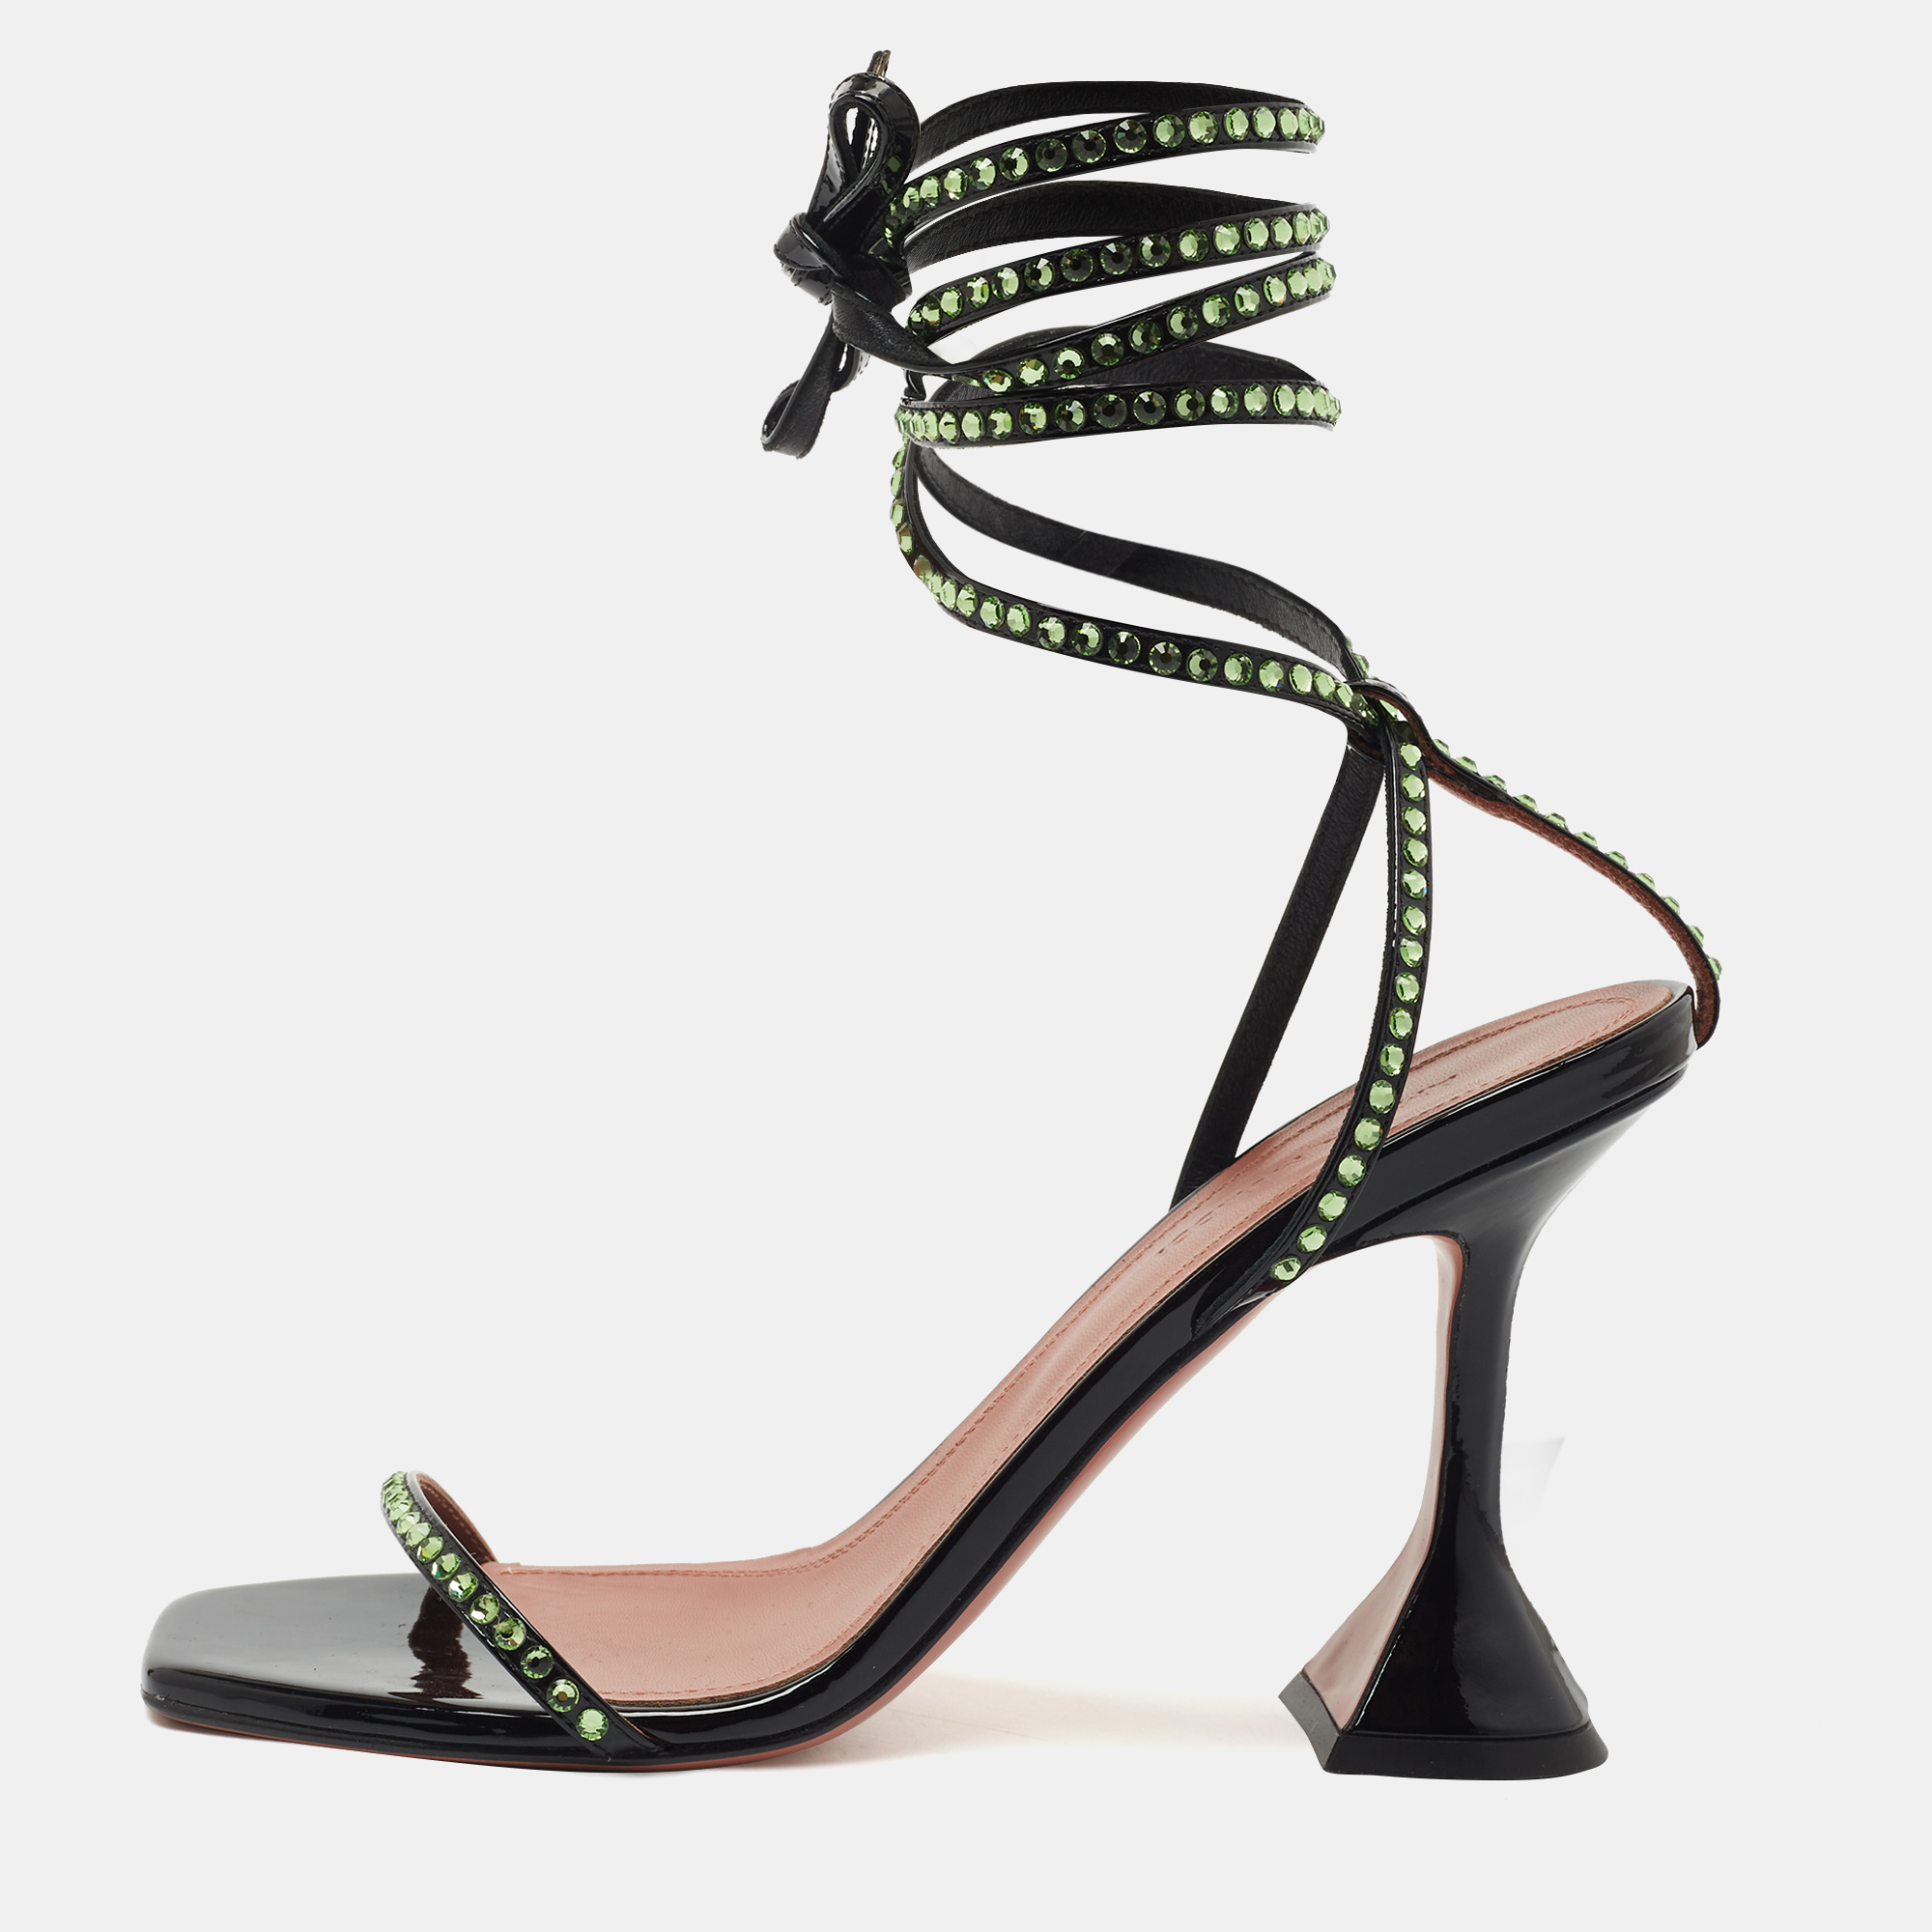 Black/Green Crystal Embellished Patent Leather Vita Ankle Tie Sandals Size 36